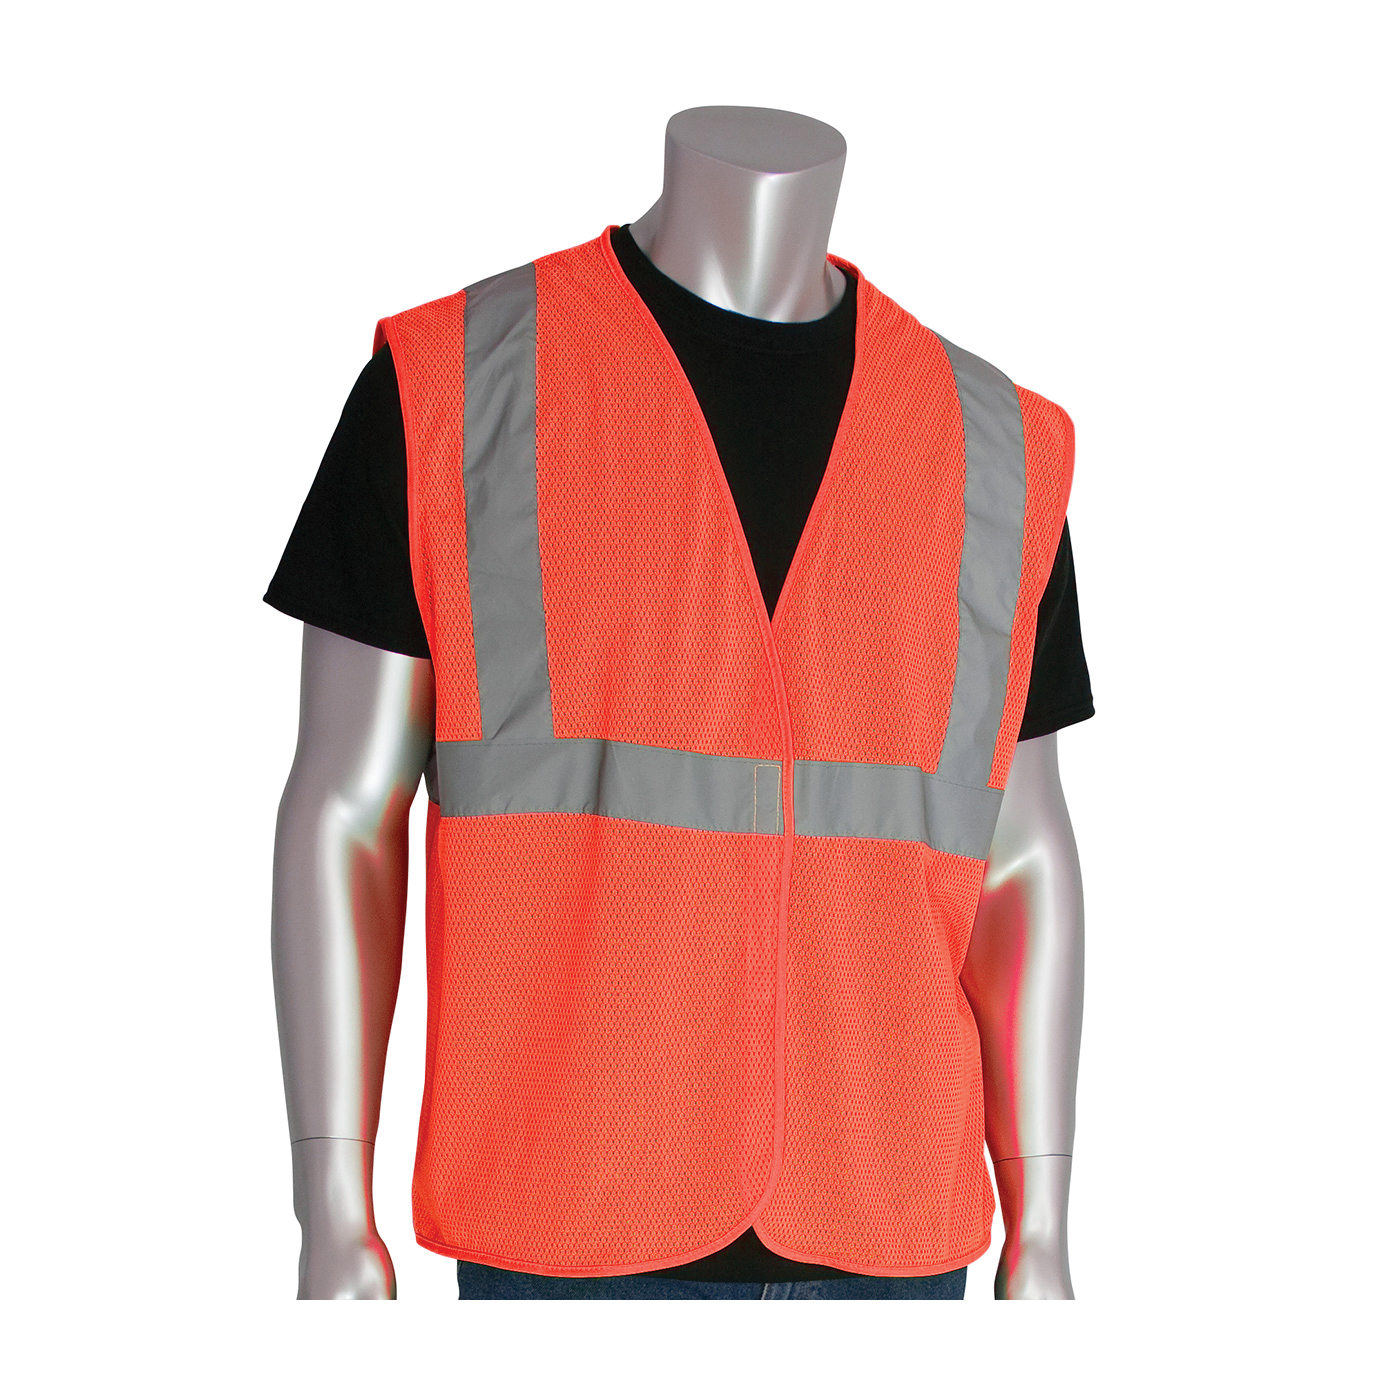 PIP® 302-MVGOR-2X Safety Vest, 2XL, Hi-Viz Orange, Polyester Mesh, Hook and Loop Closure, ANSI Class: Class 2, Specifications Met: ANSI 107 Type R